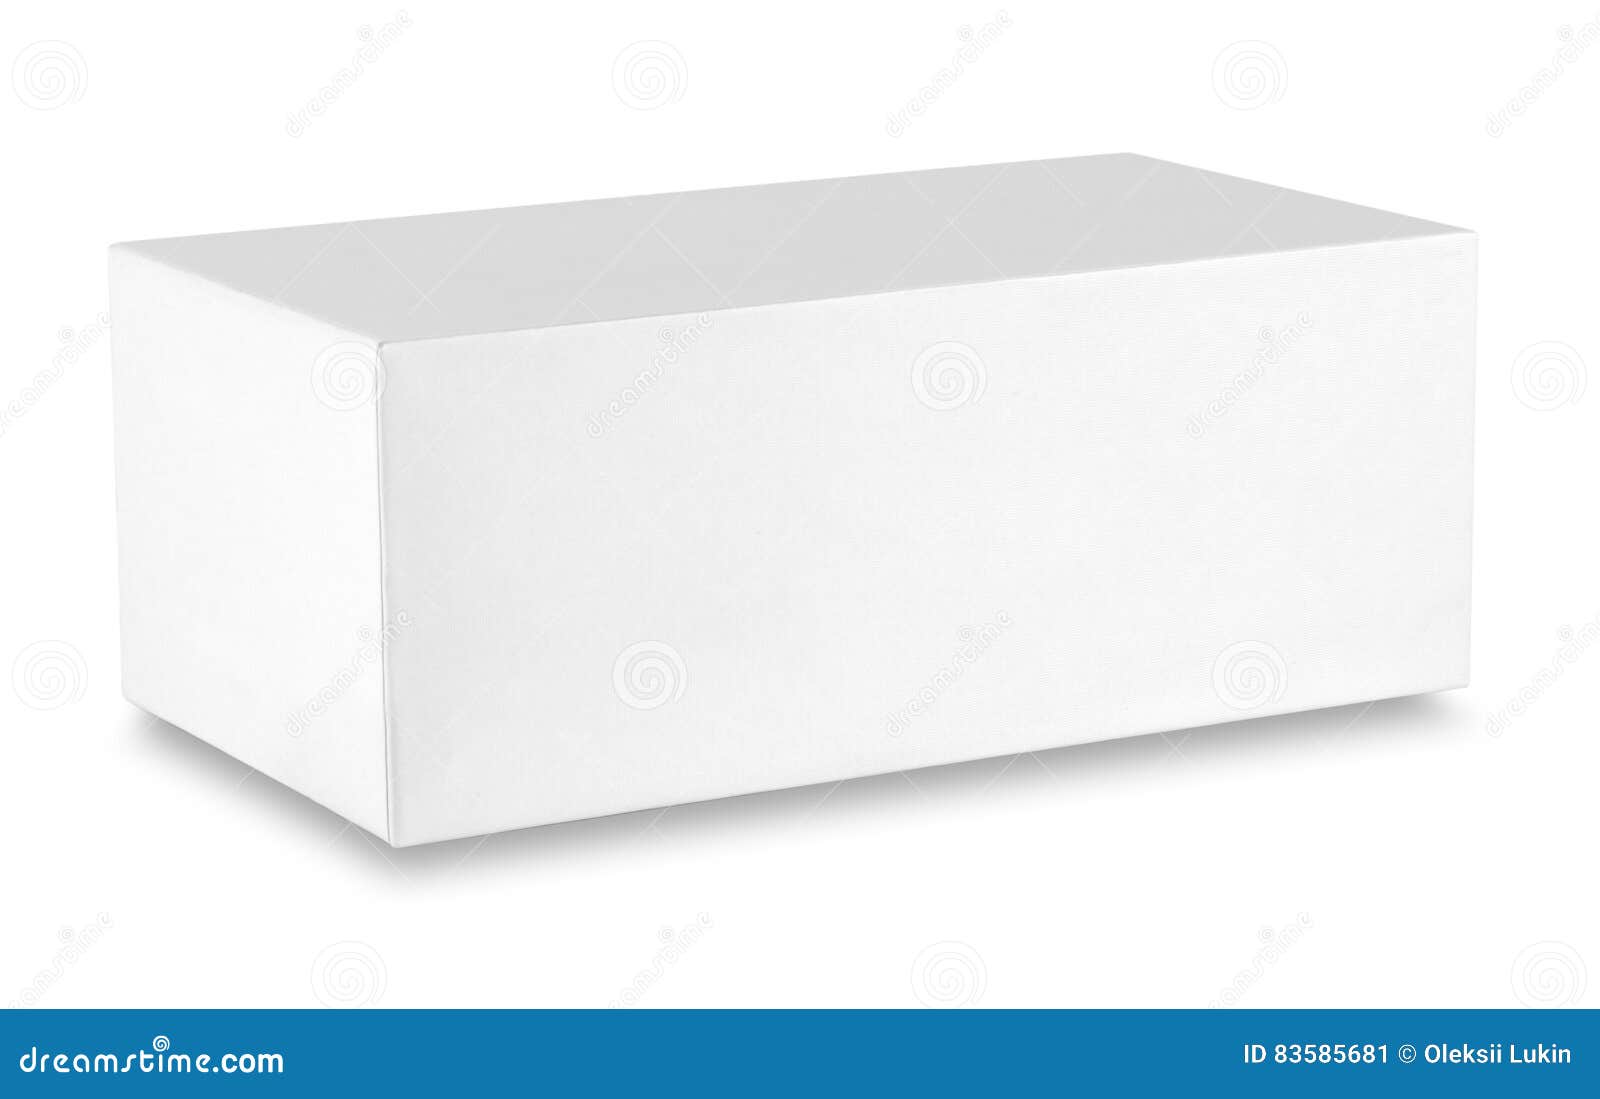 white rectangular box shot at an angle